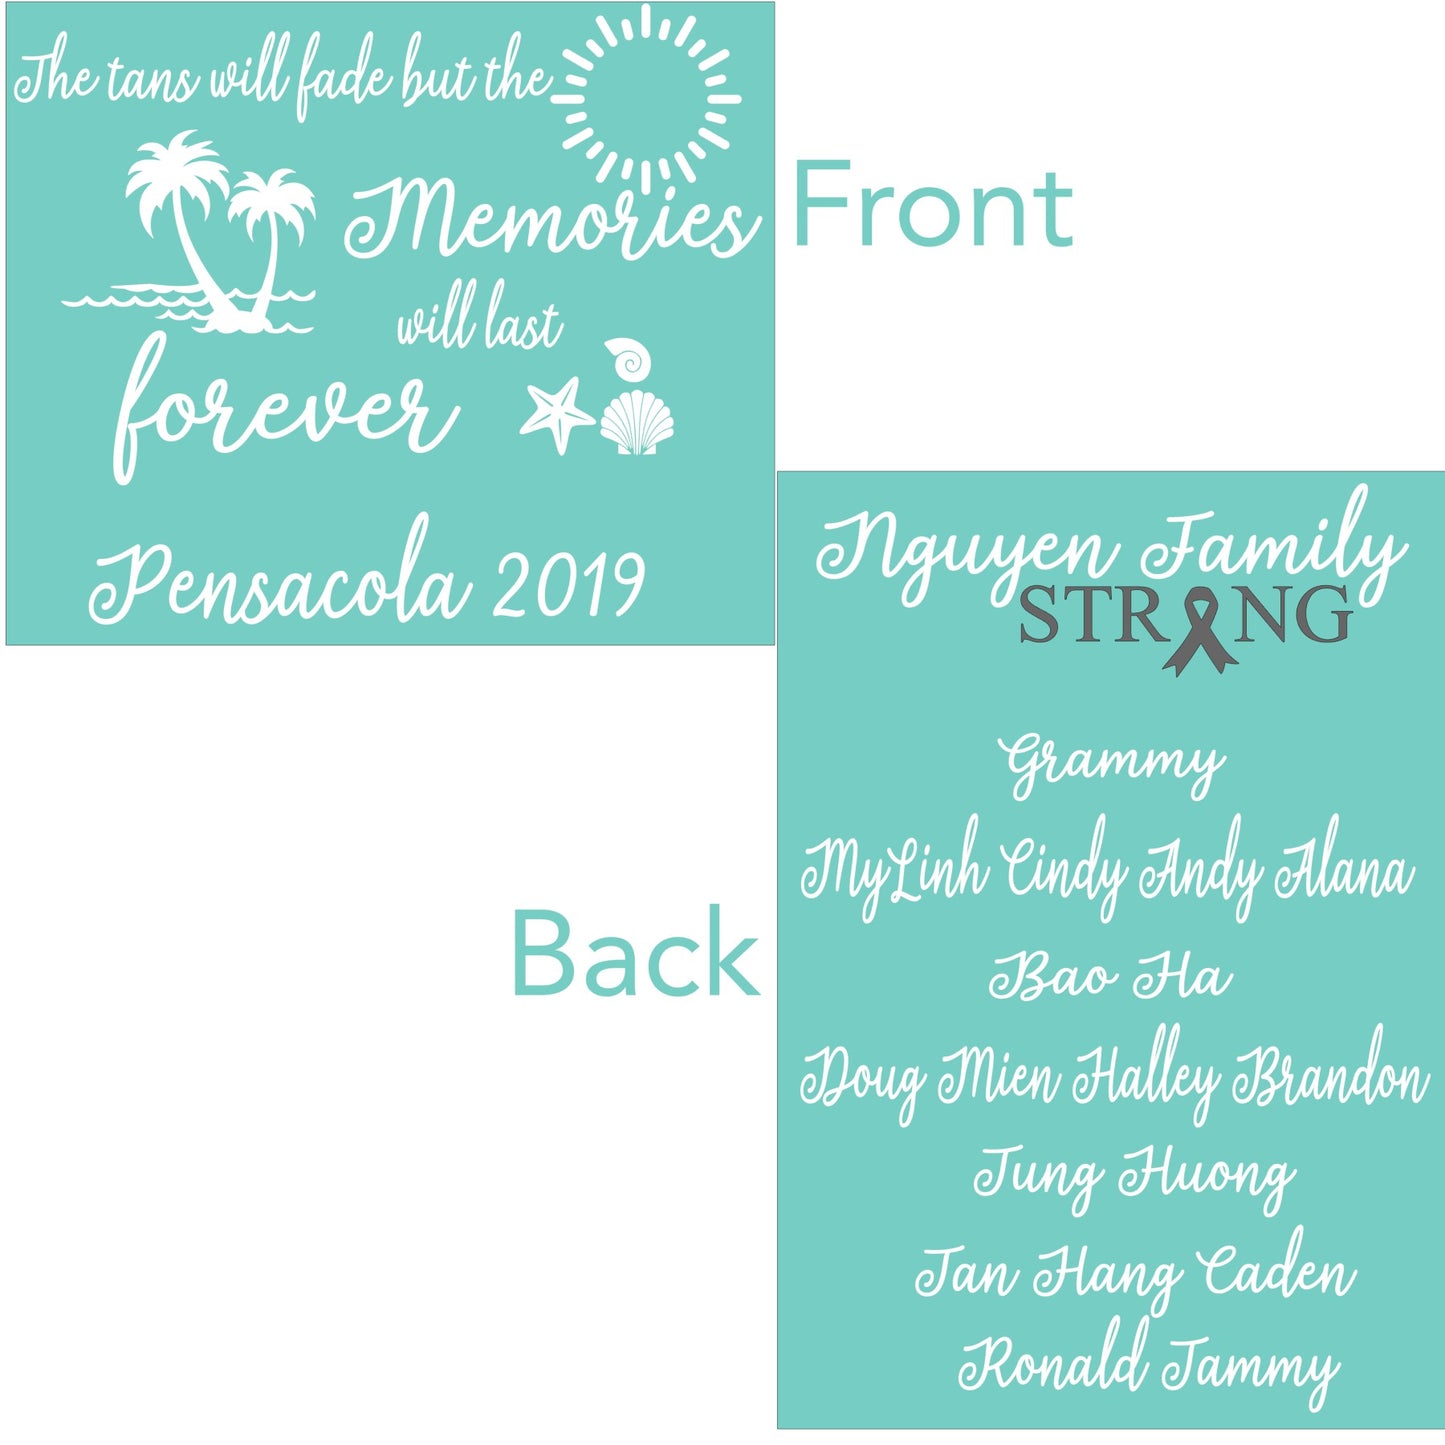 Nguyen's Family Pensacola Trip 2019